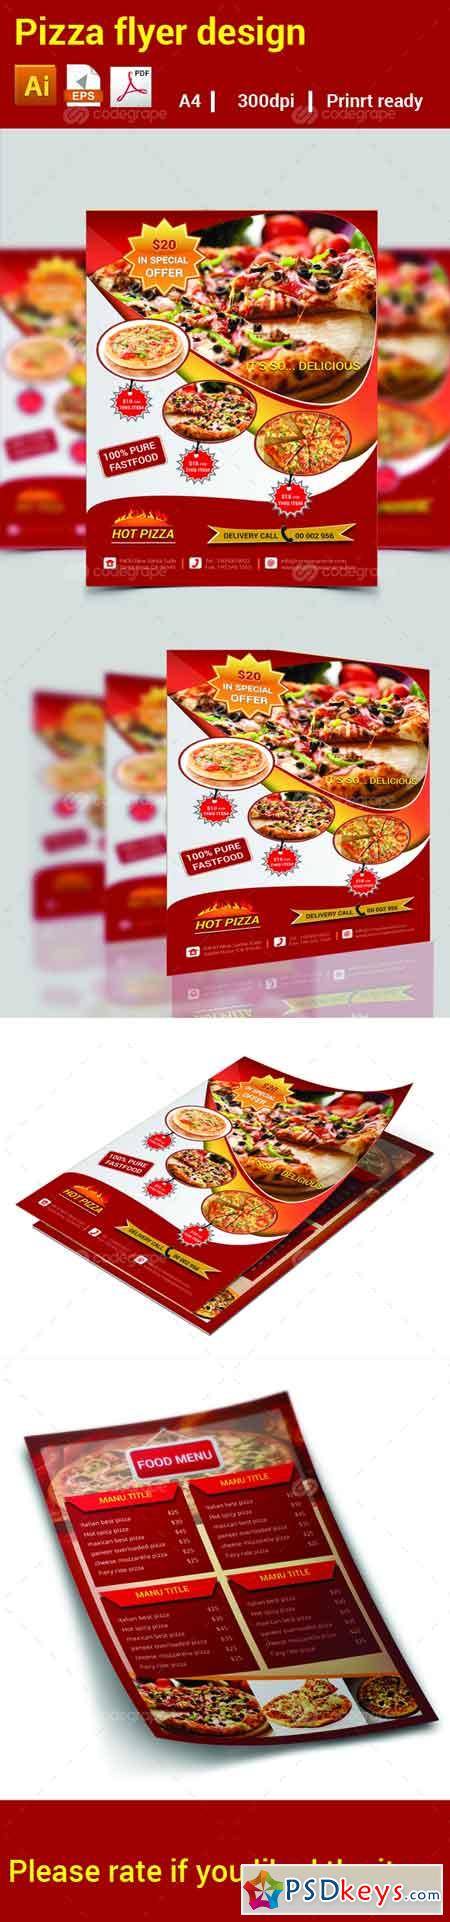 Pizza Flyer Design 6288